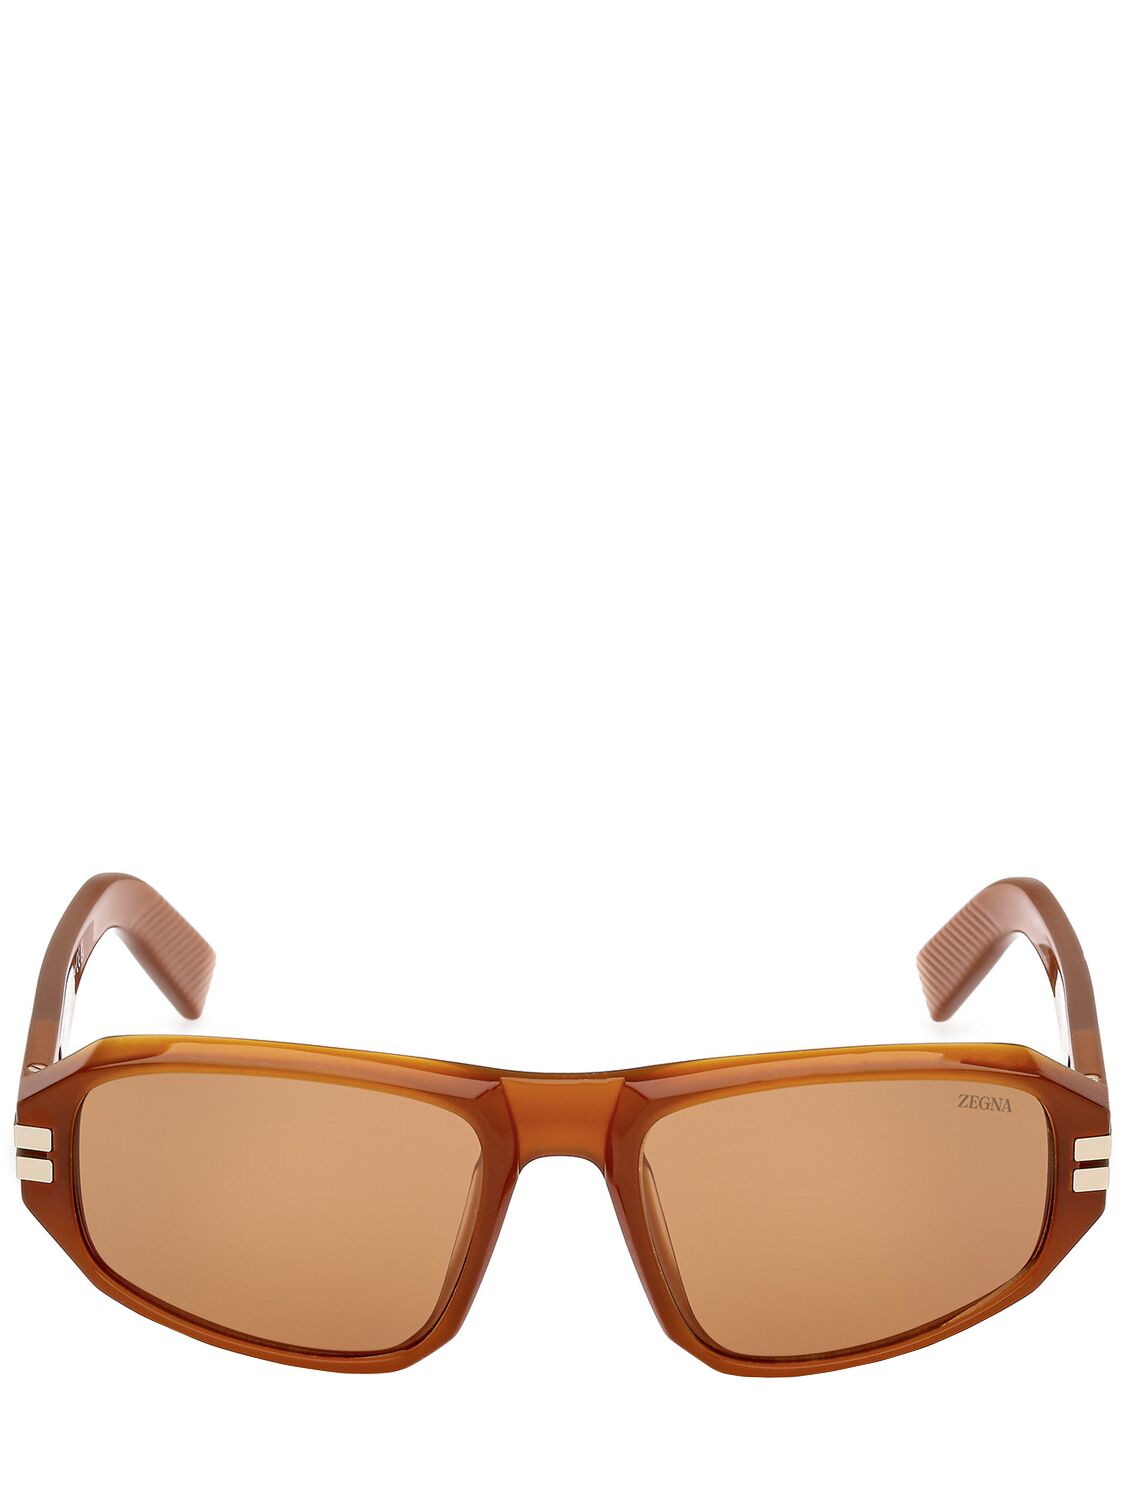 Zegna Squared Sunglasses W/ Lanyard In Brown